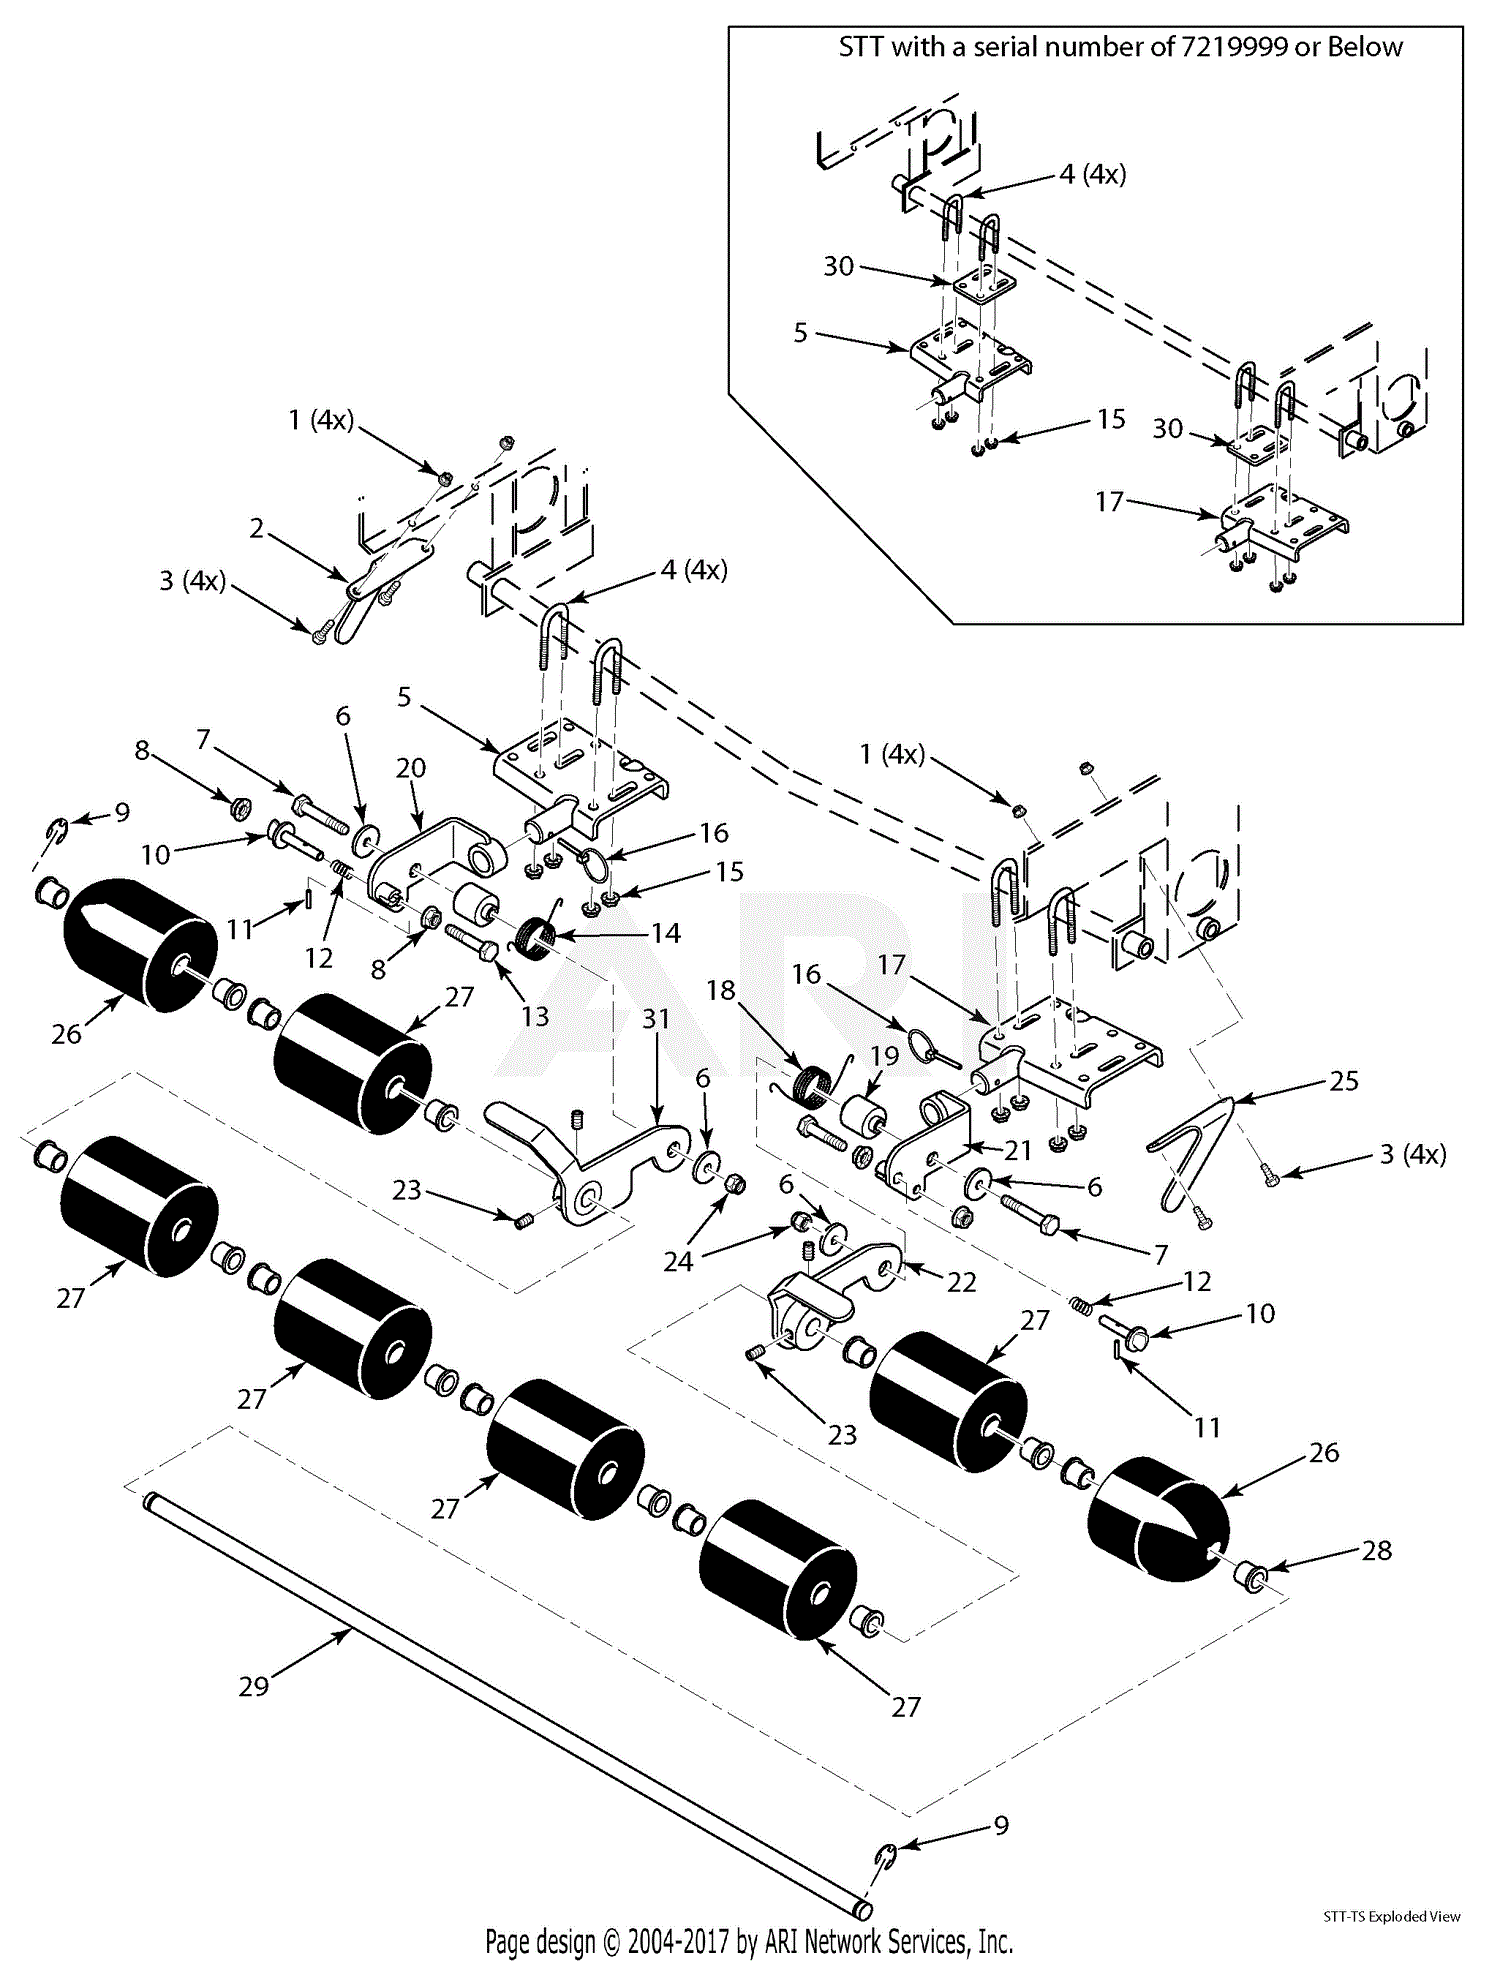  Scag  STT TIGER  STRIPER  with part number 9269 Parts Diagram 